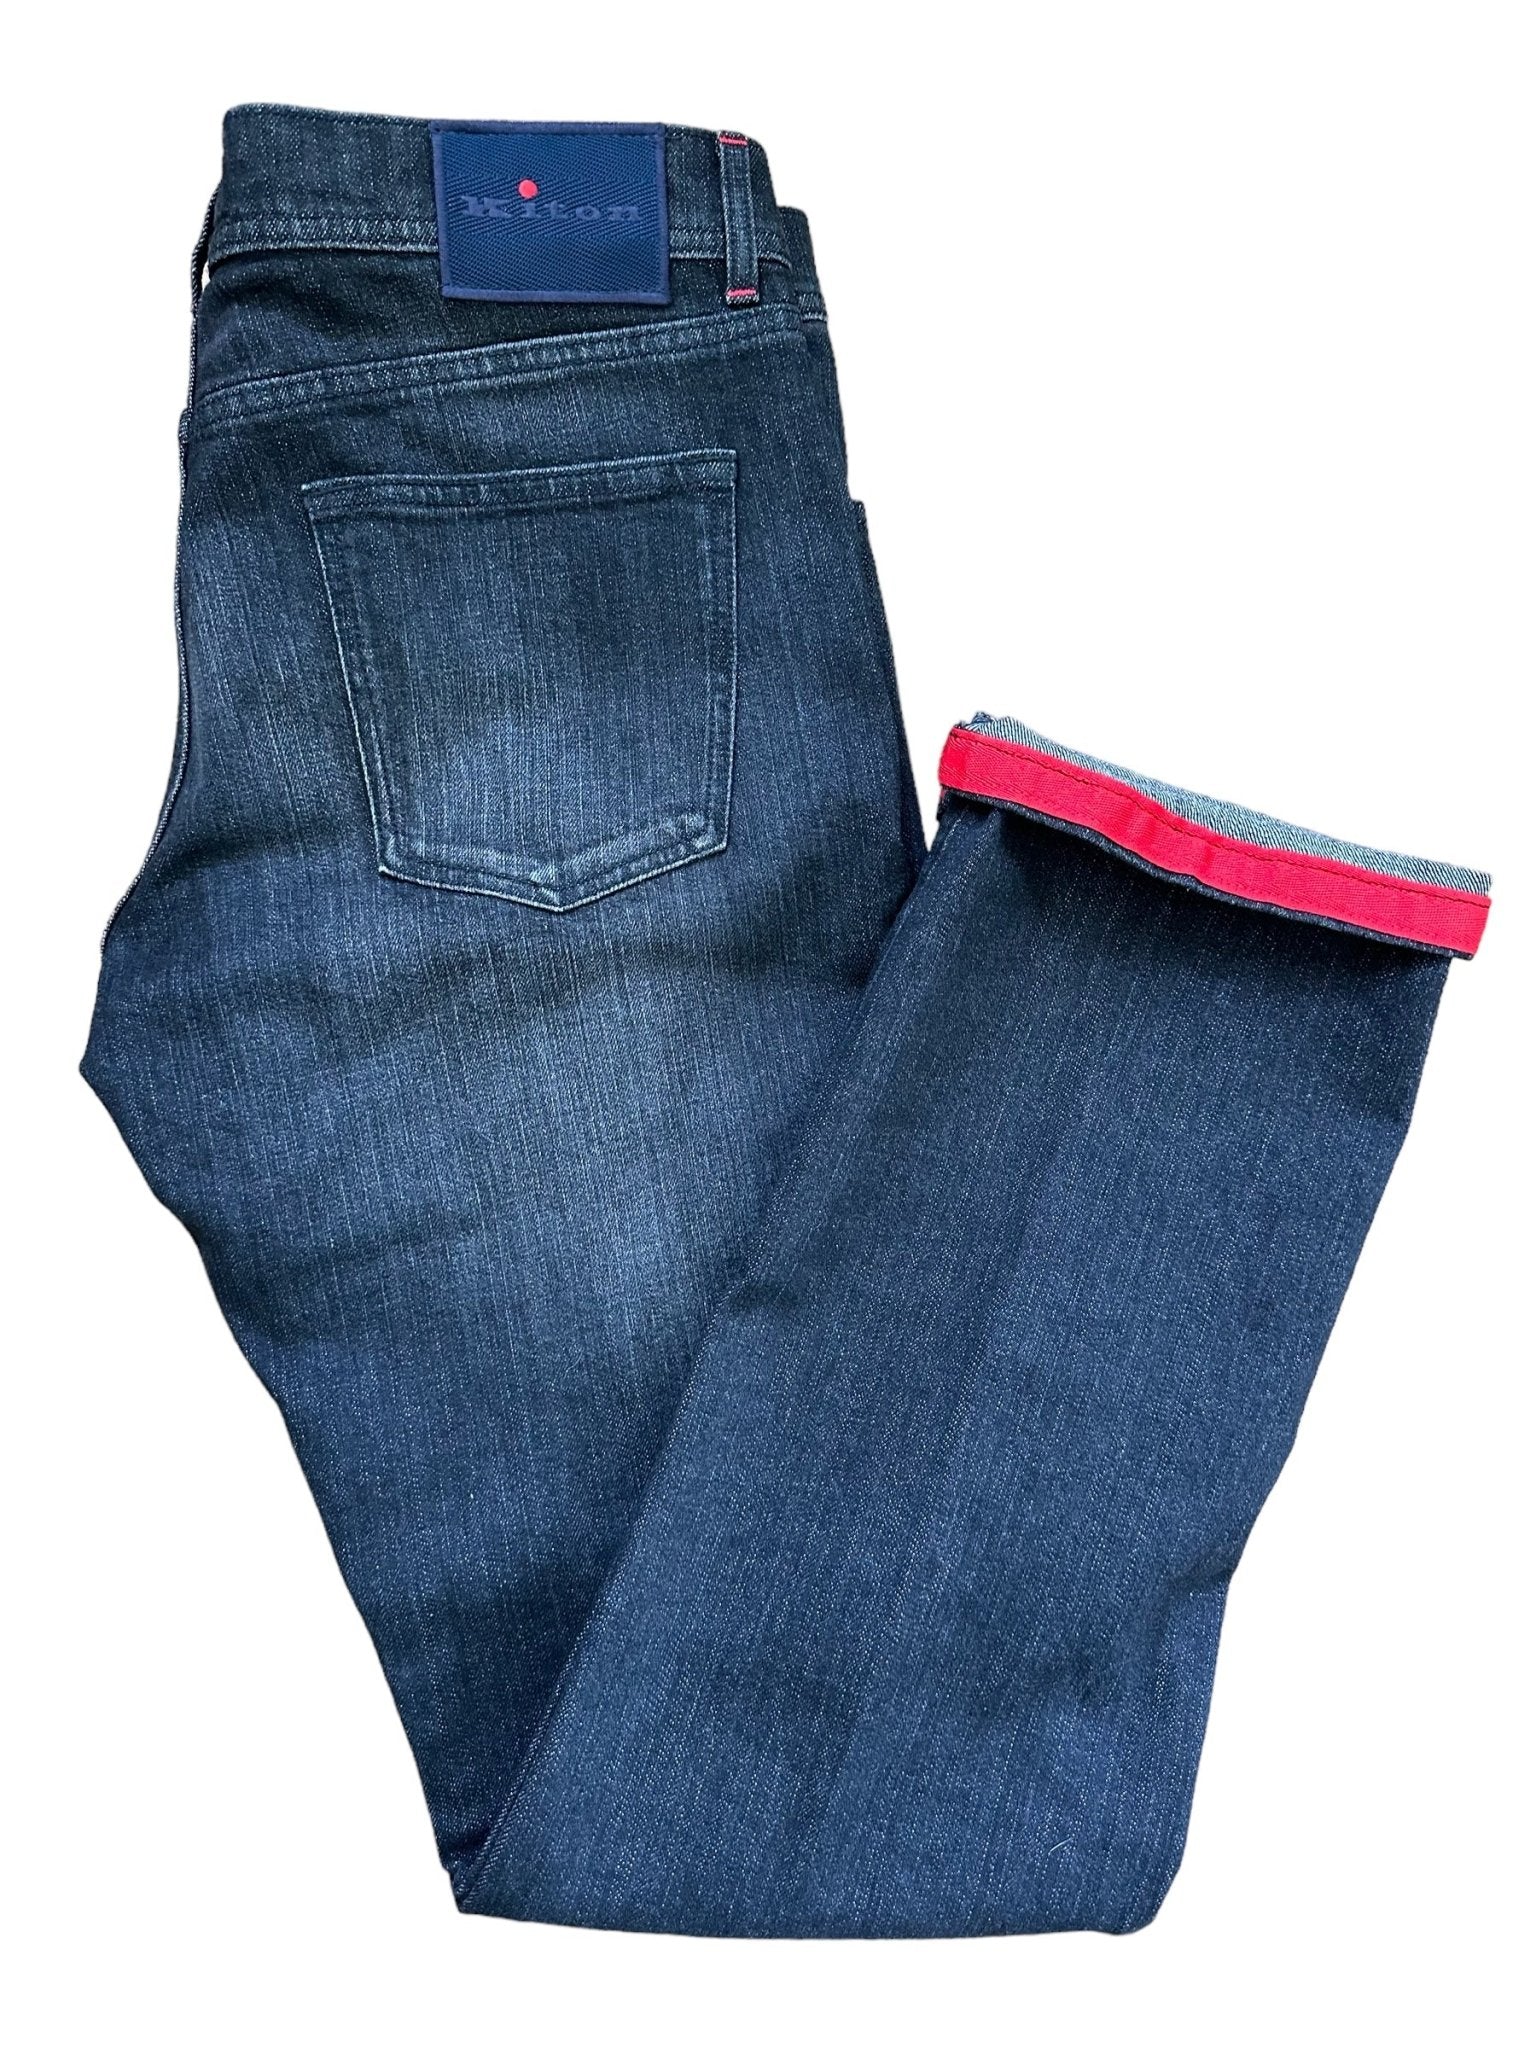 Kiton Jeans - 24/7 Clothing